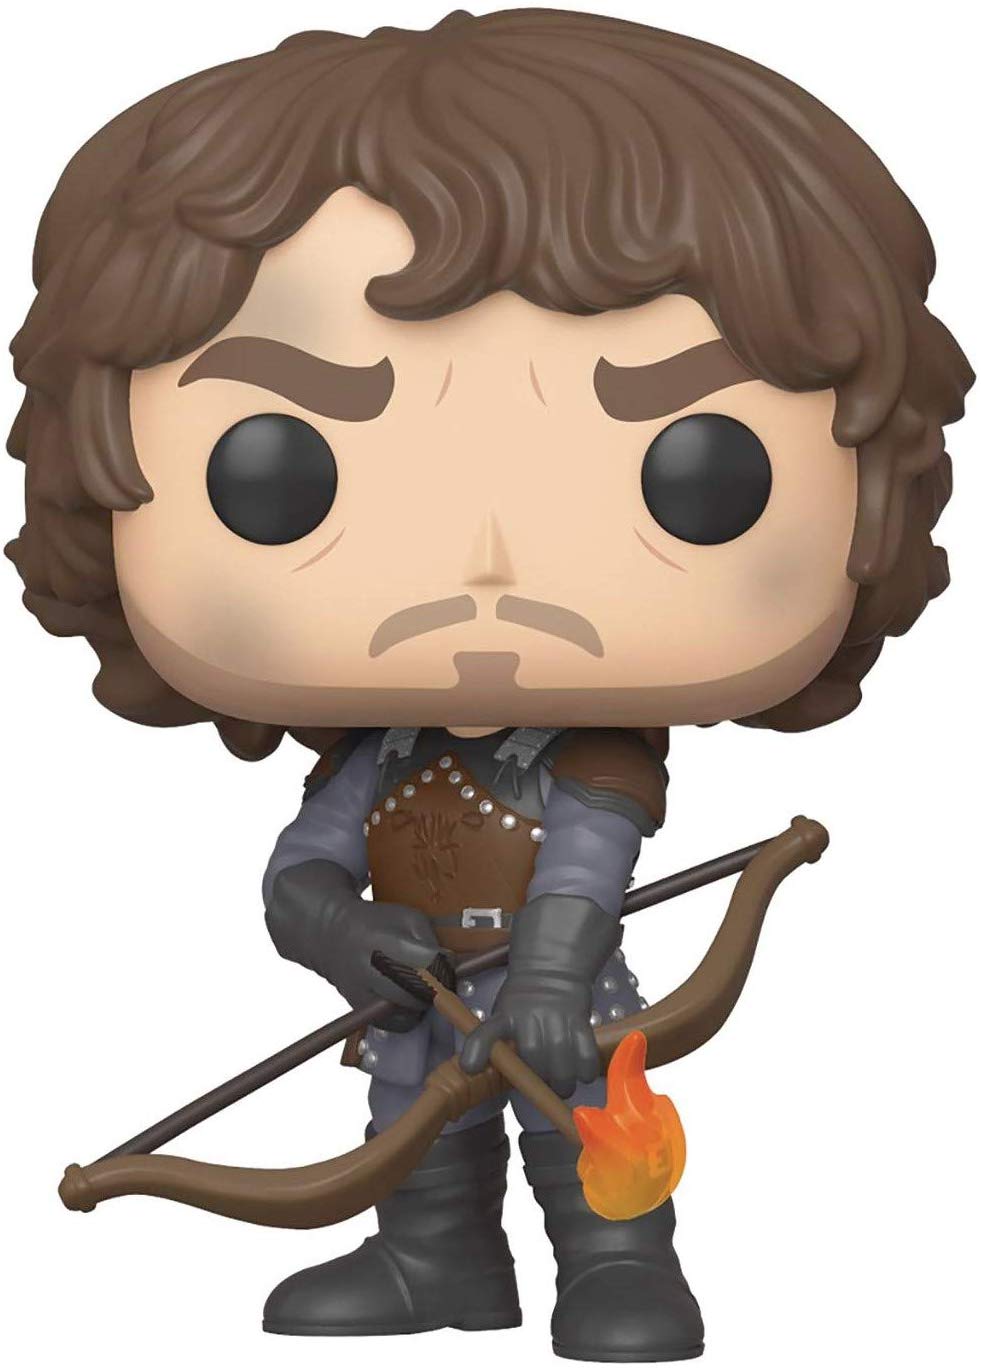 Funko POP! Game of Thrones: Theon Greyjoy with Flaming Arrows Pop! Vinyl Figure